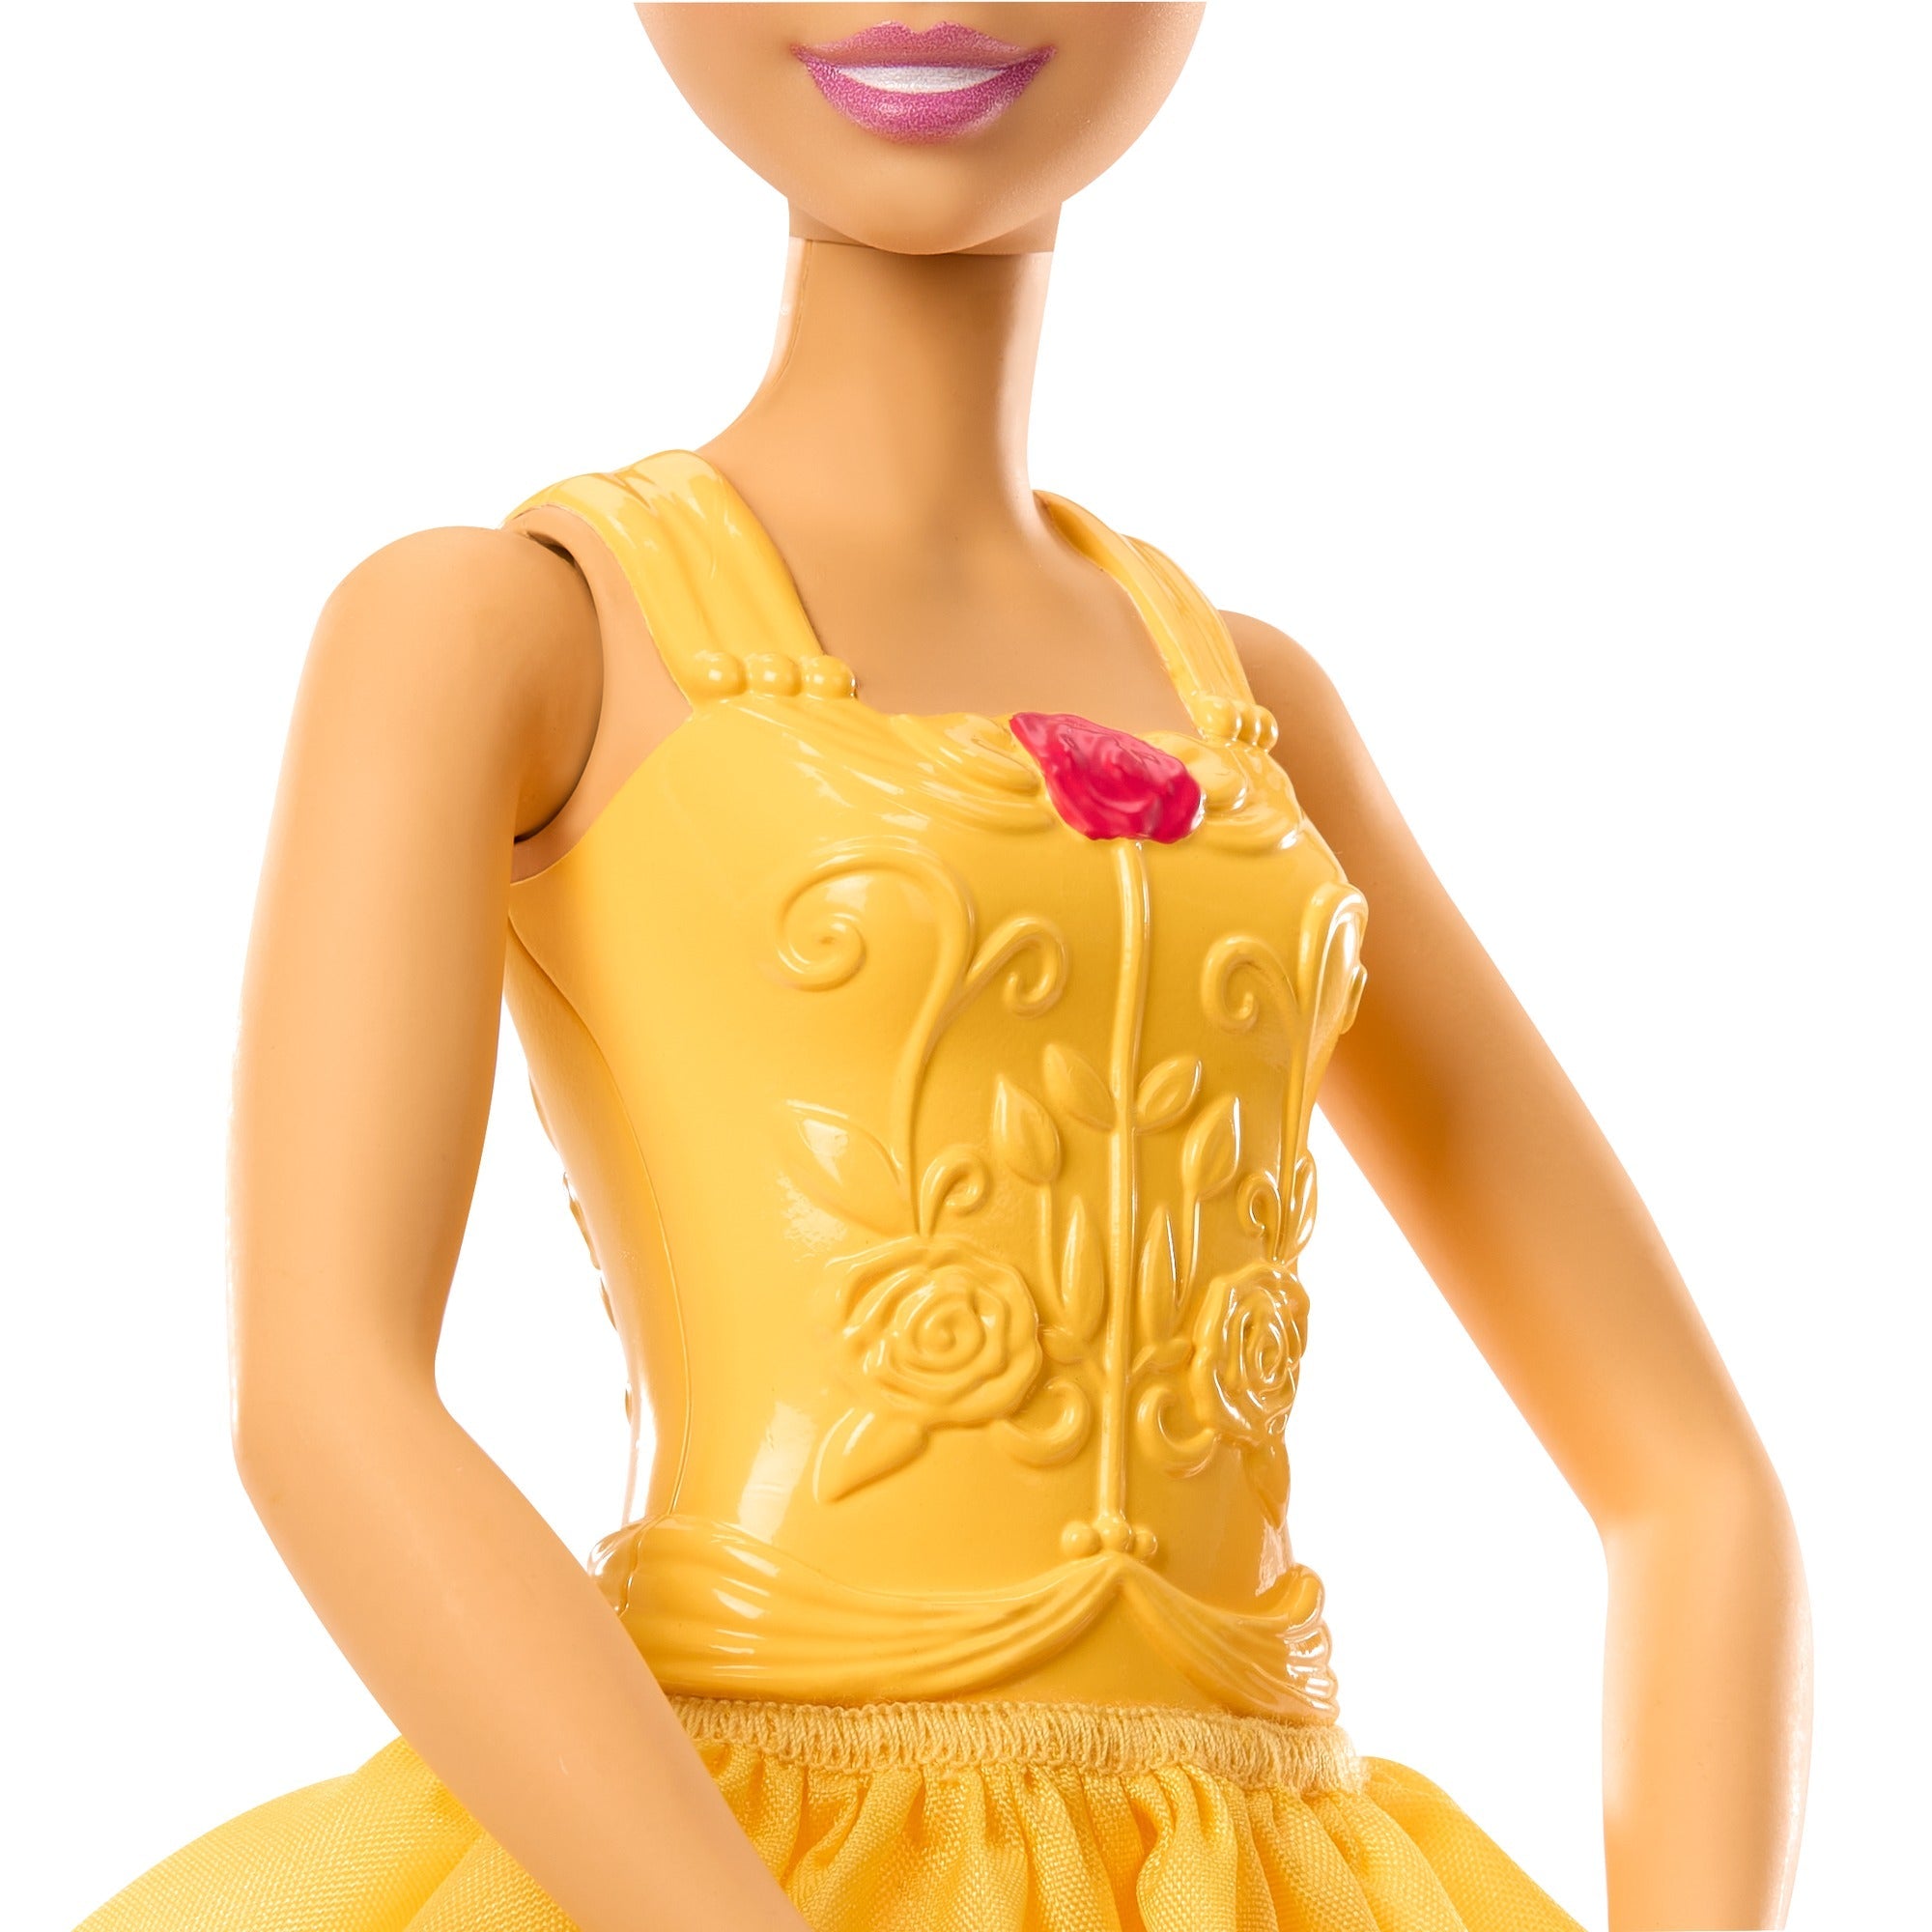 Disney Ballerina Belle Doll by Mattel -Mattel - India - www.superherotoystore.com